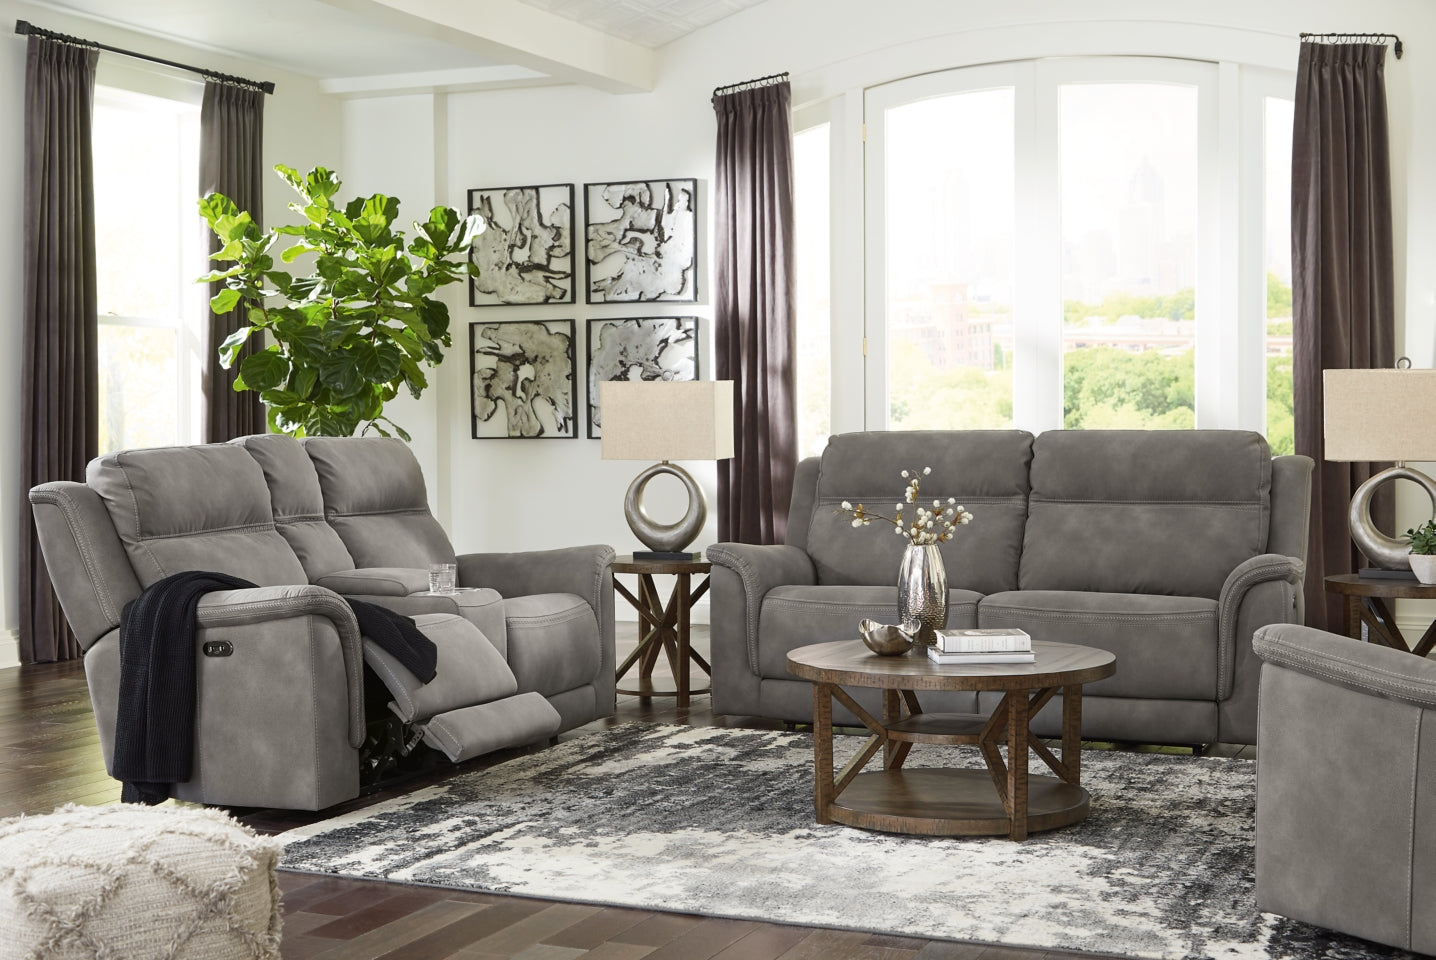 Next-Gen DuraPella Sofa, Loveseat and Recliner - PKG008141 - furniture place usa